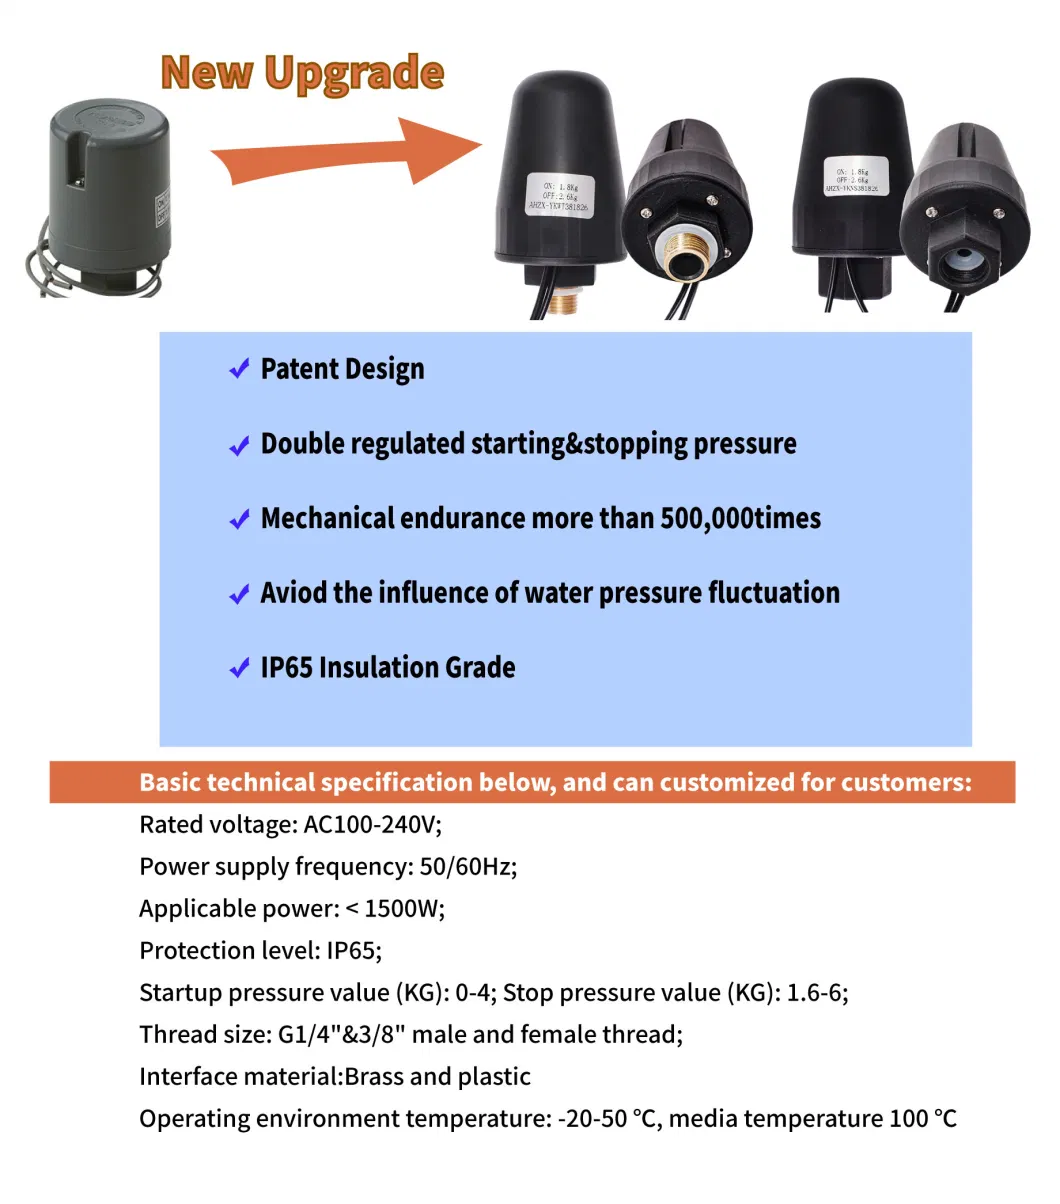 Plastic Male Thread G3/8" 550 750W/220V Booster Water Pump Pressure Controller (2.2-3.0Bar)